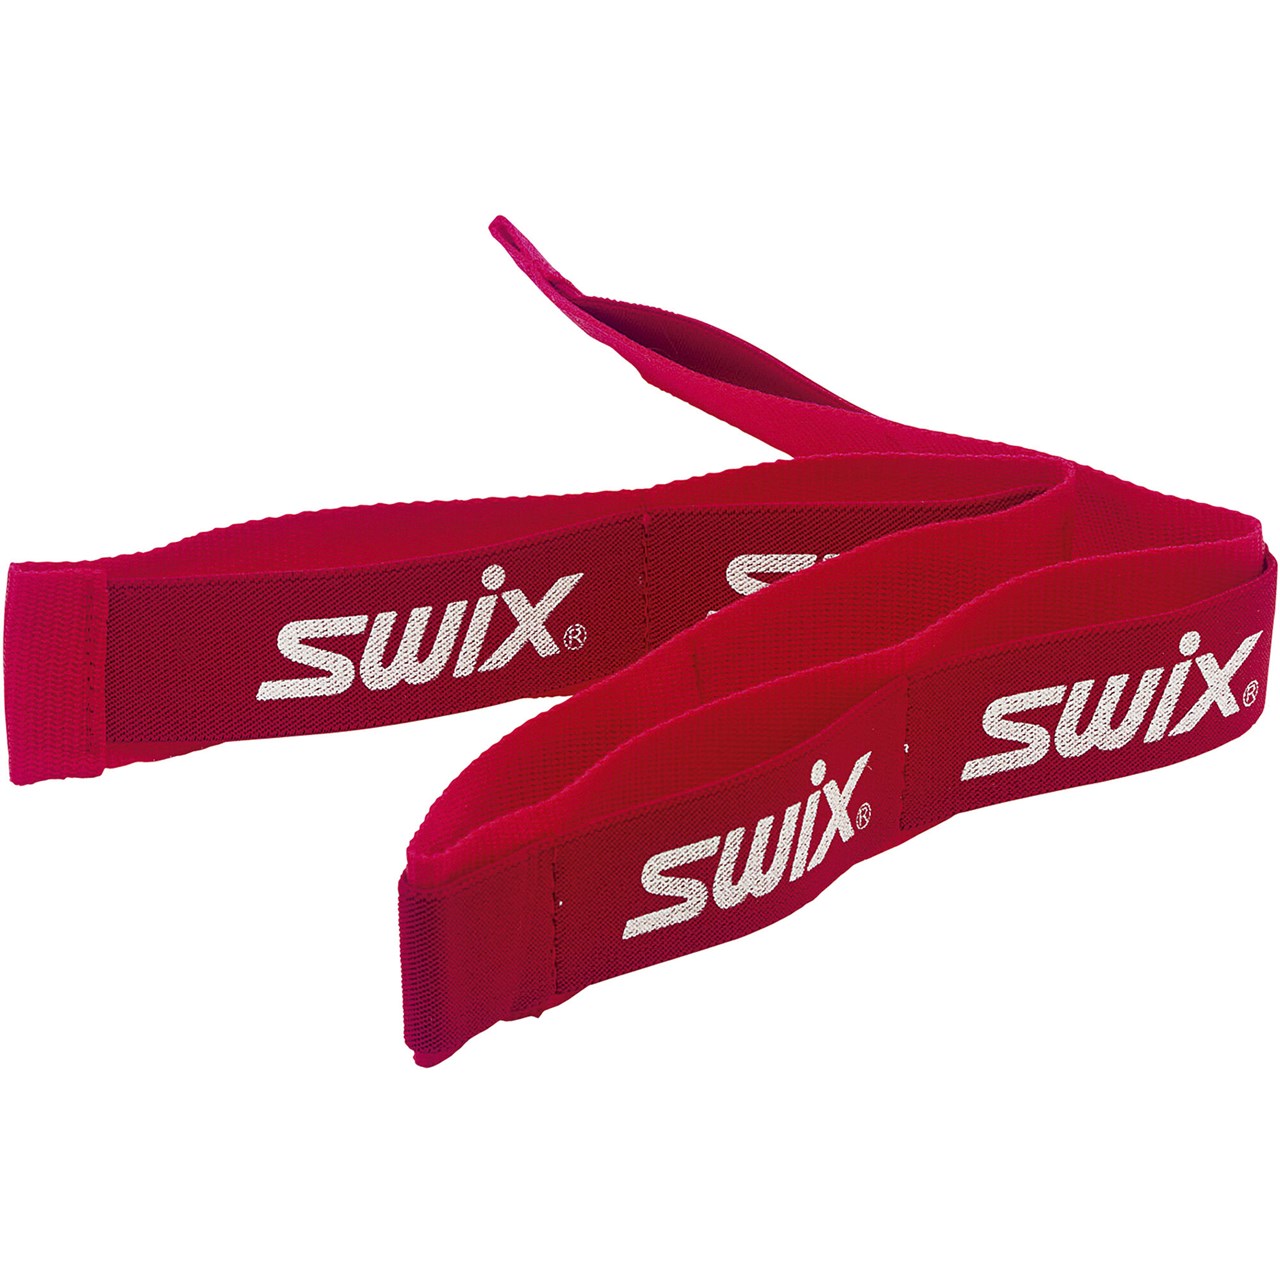 Swix ski wall rack 8 par